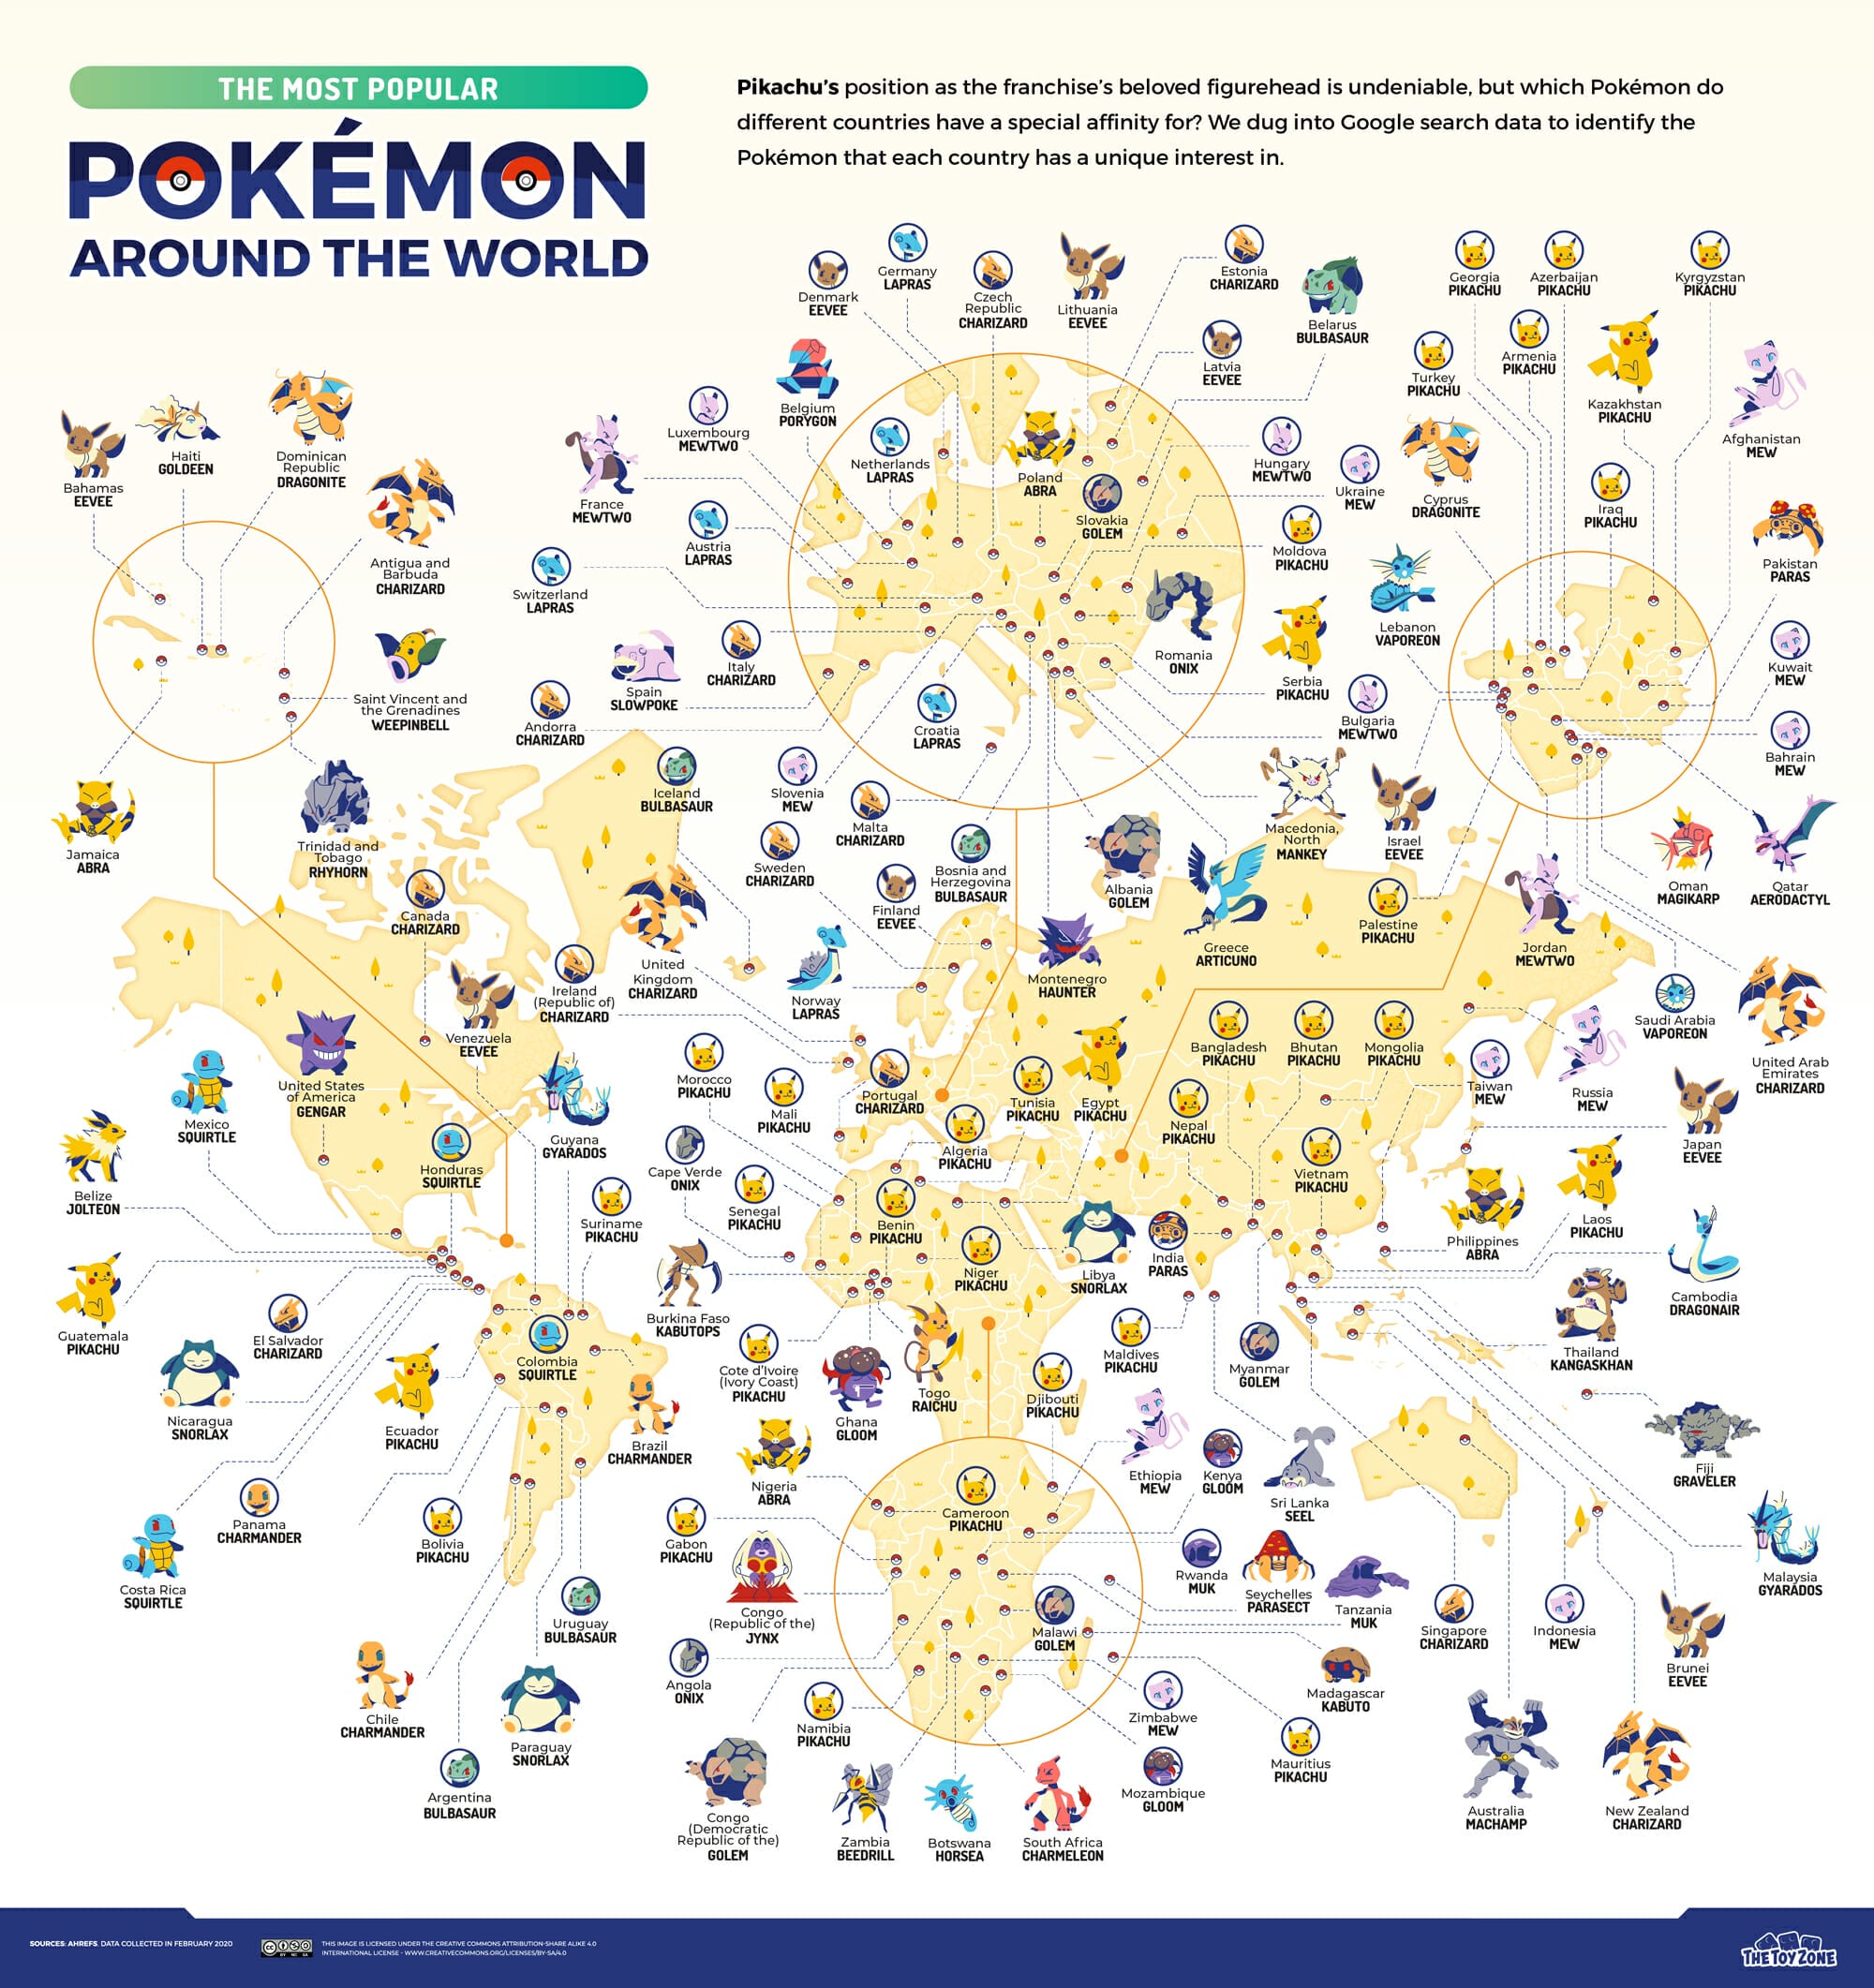 The most popular Pokemon around the world